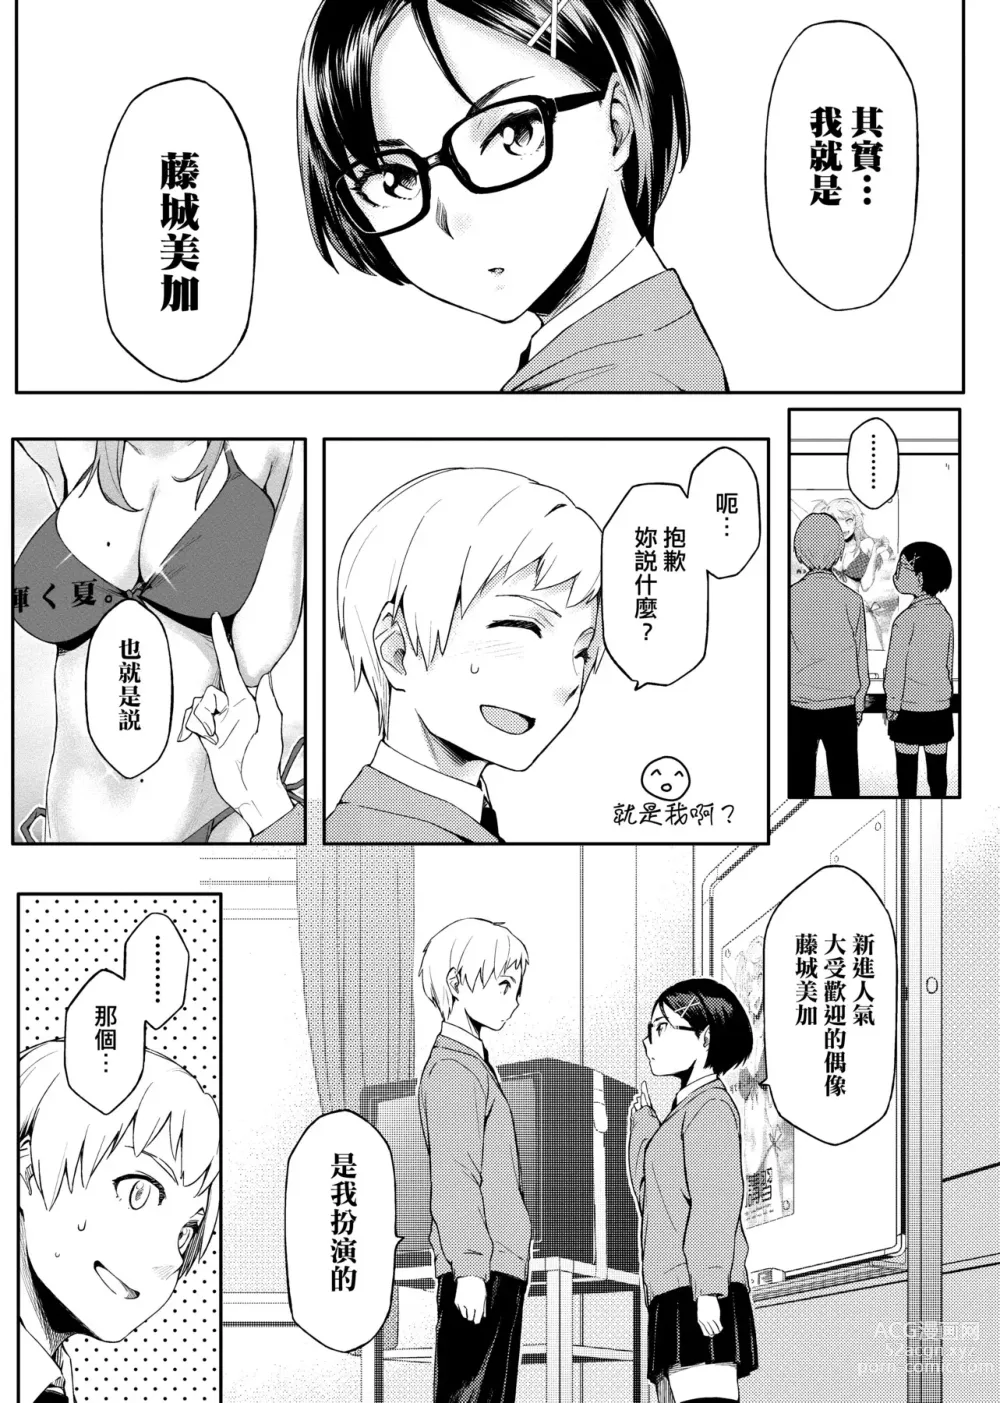 Page 216 of manga Natsu Koi Ota Girl - What Brings You to Japan?